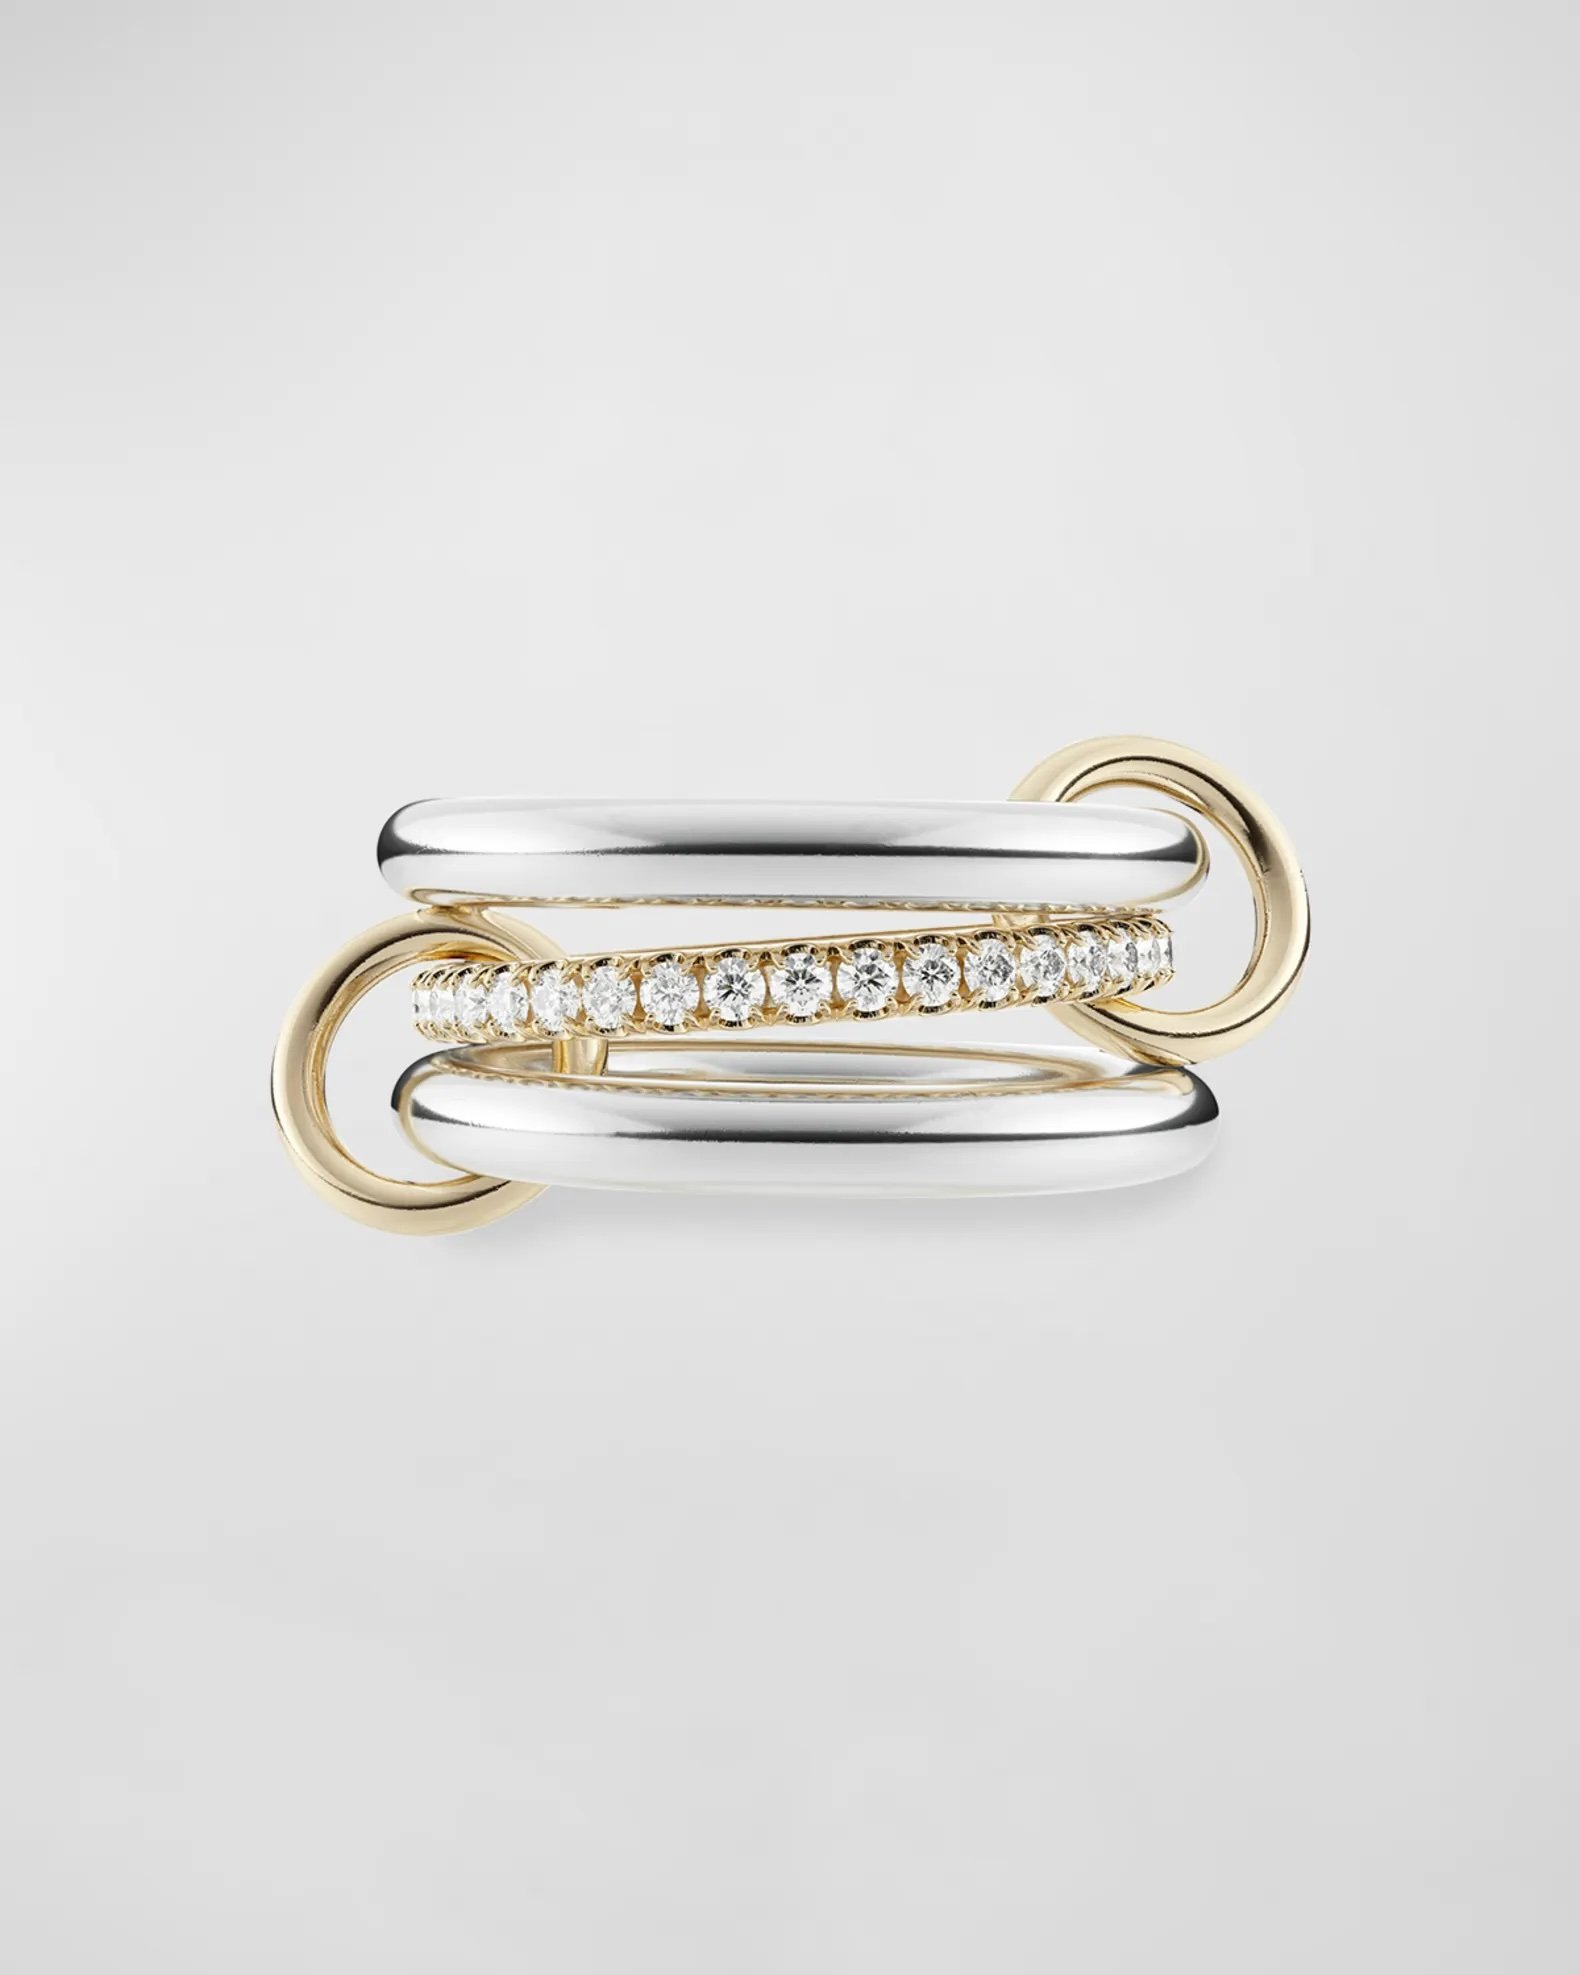 Spinelli Kilcollin Ring, $4,400